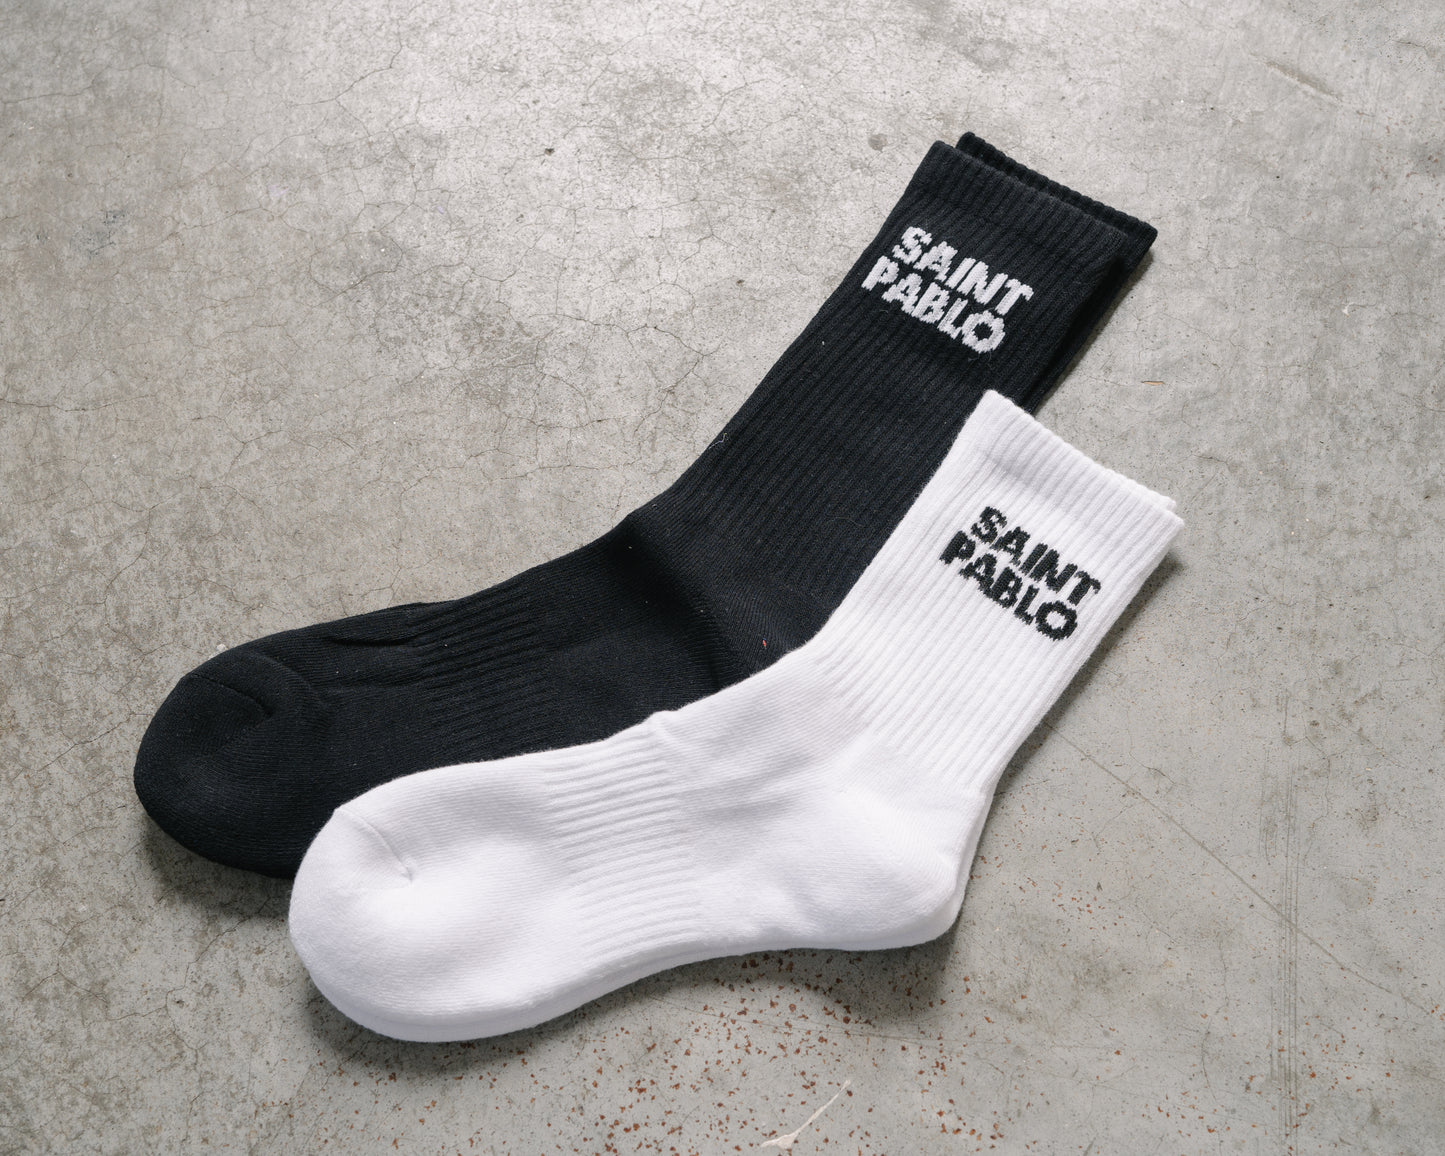 Saint Pablo Crew Socks